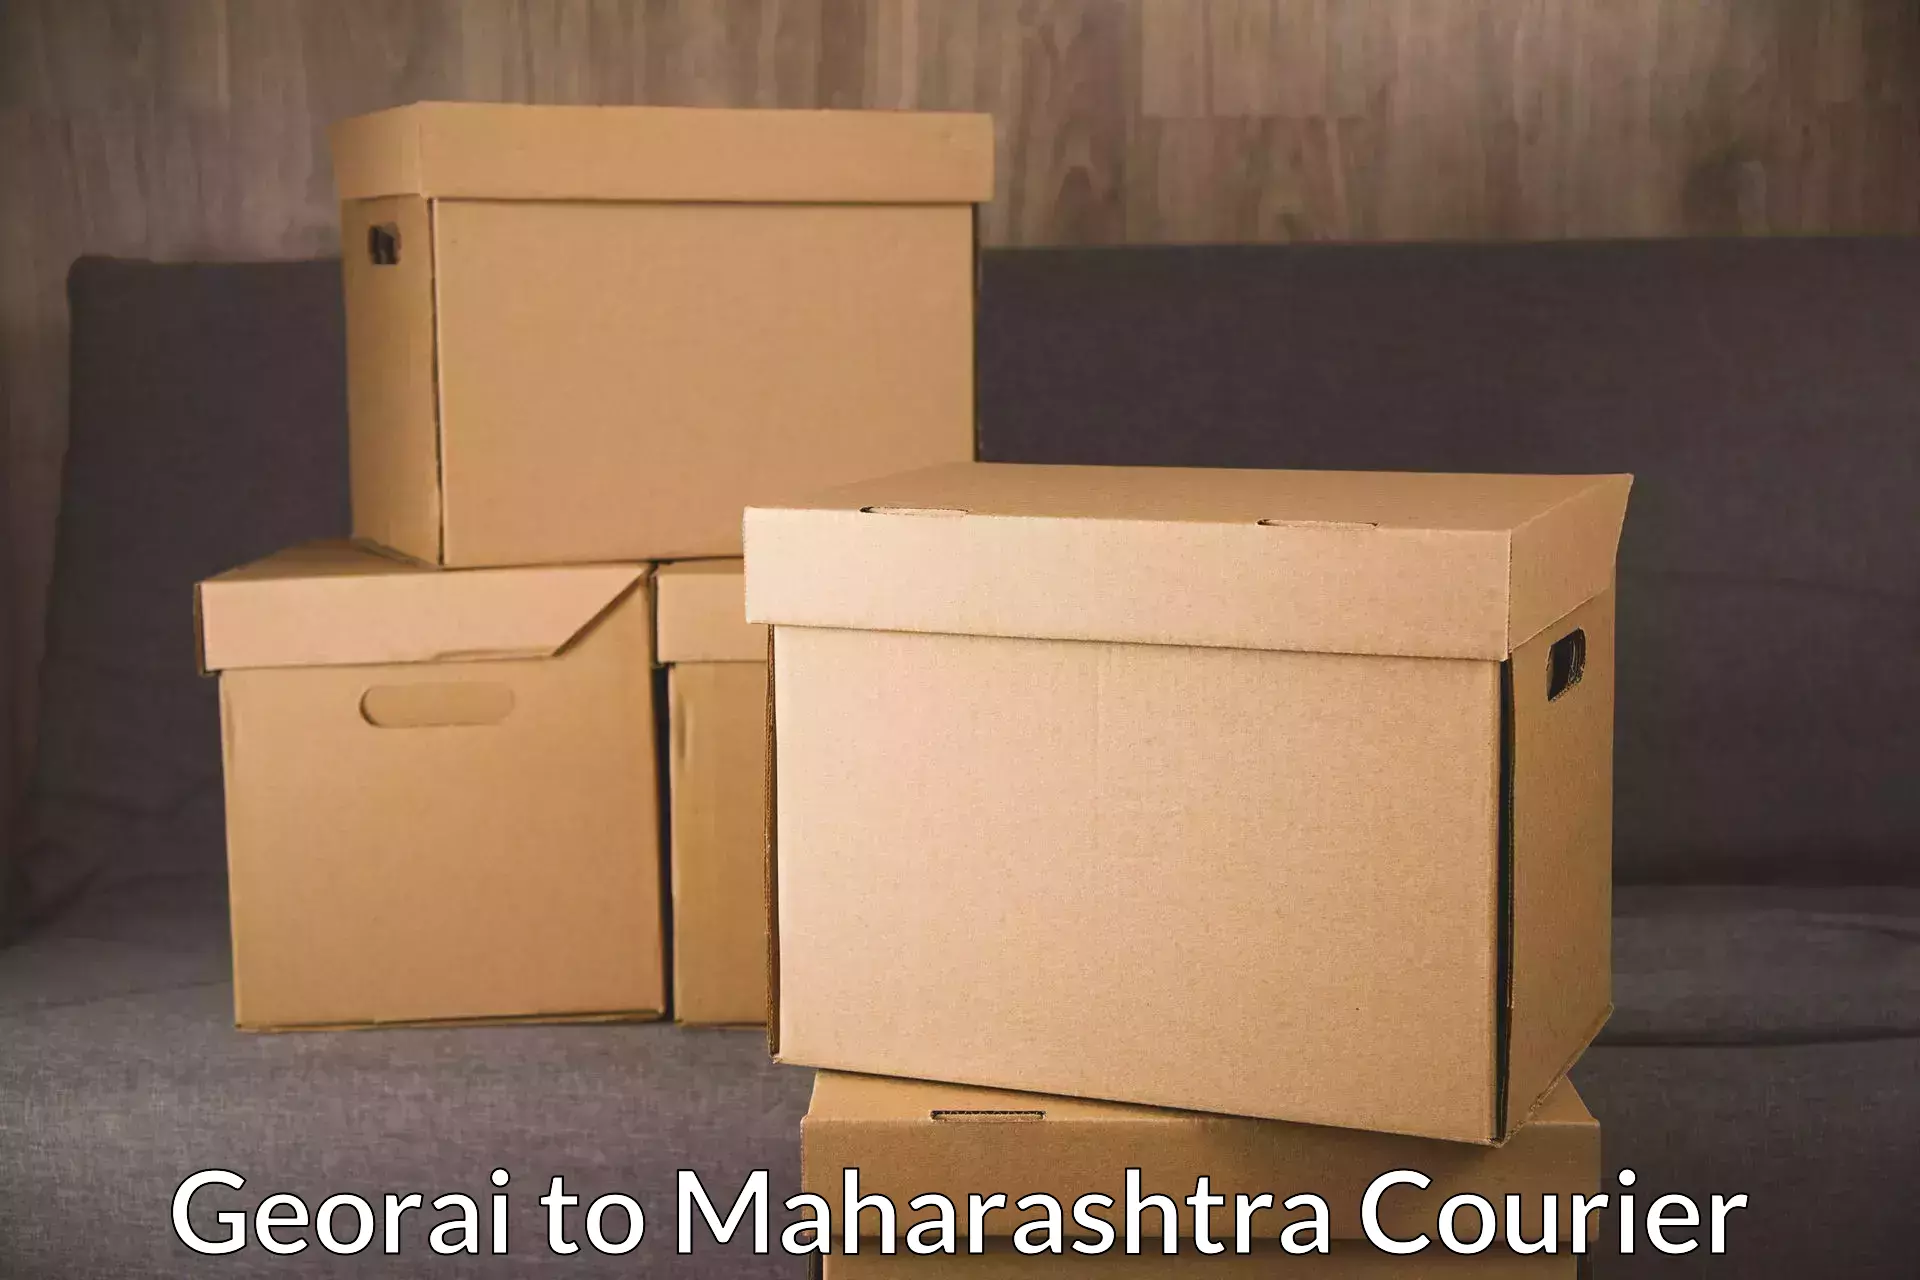 On-call courier service Georai to Maharashtra